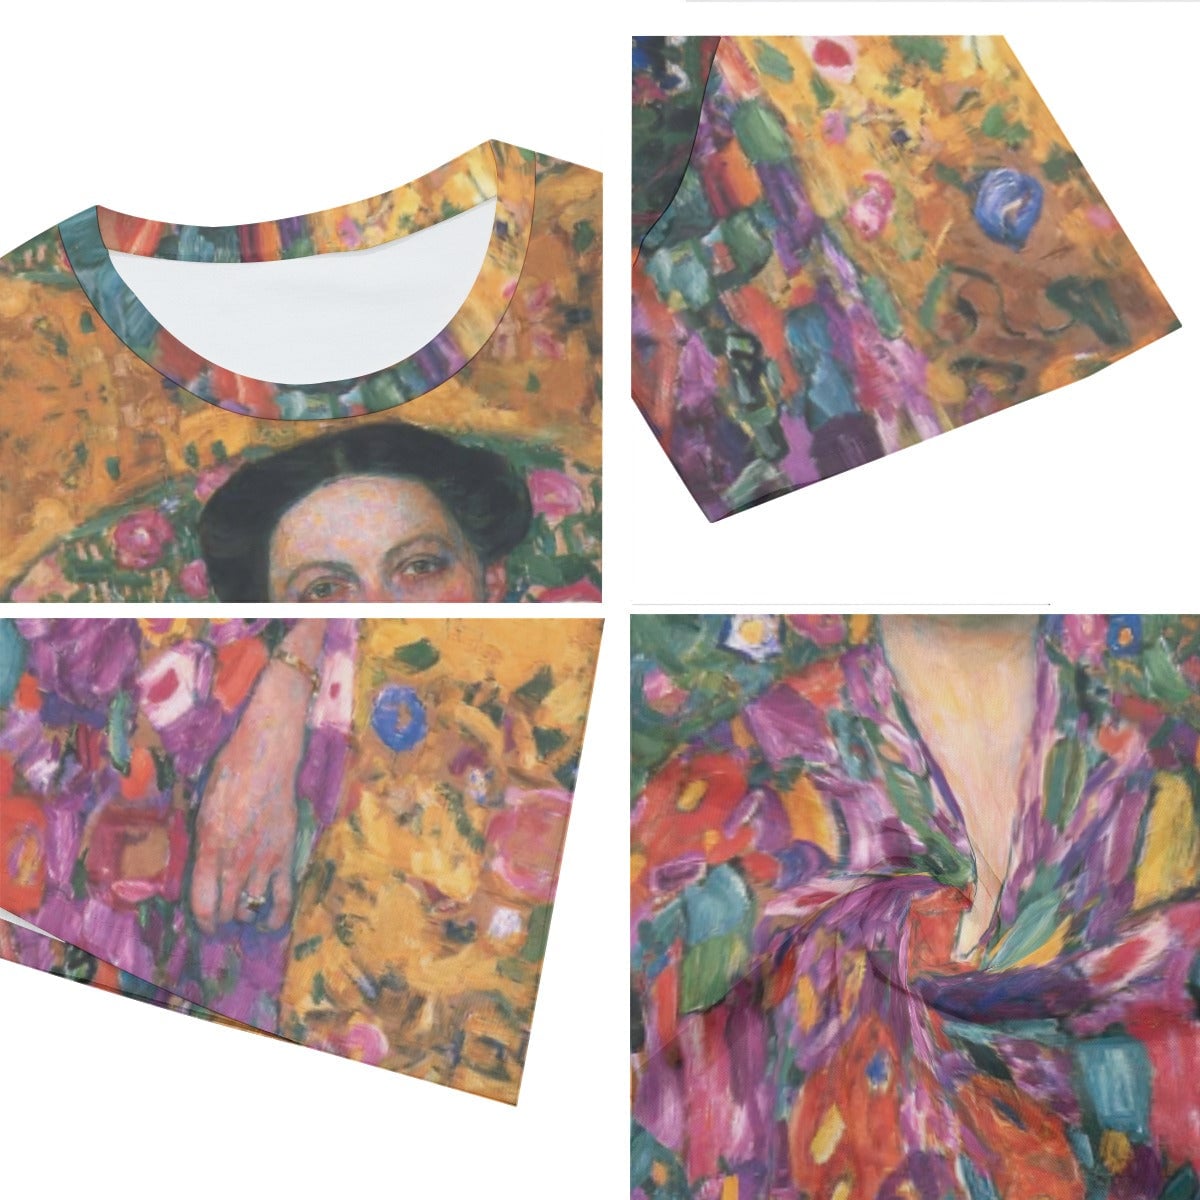 Gustav Klimt’s Portrait of Eugenia Primavesi T-Shirt